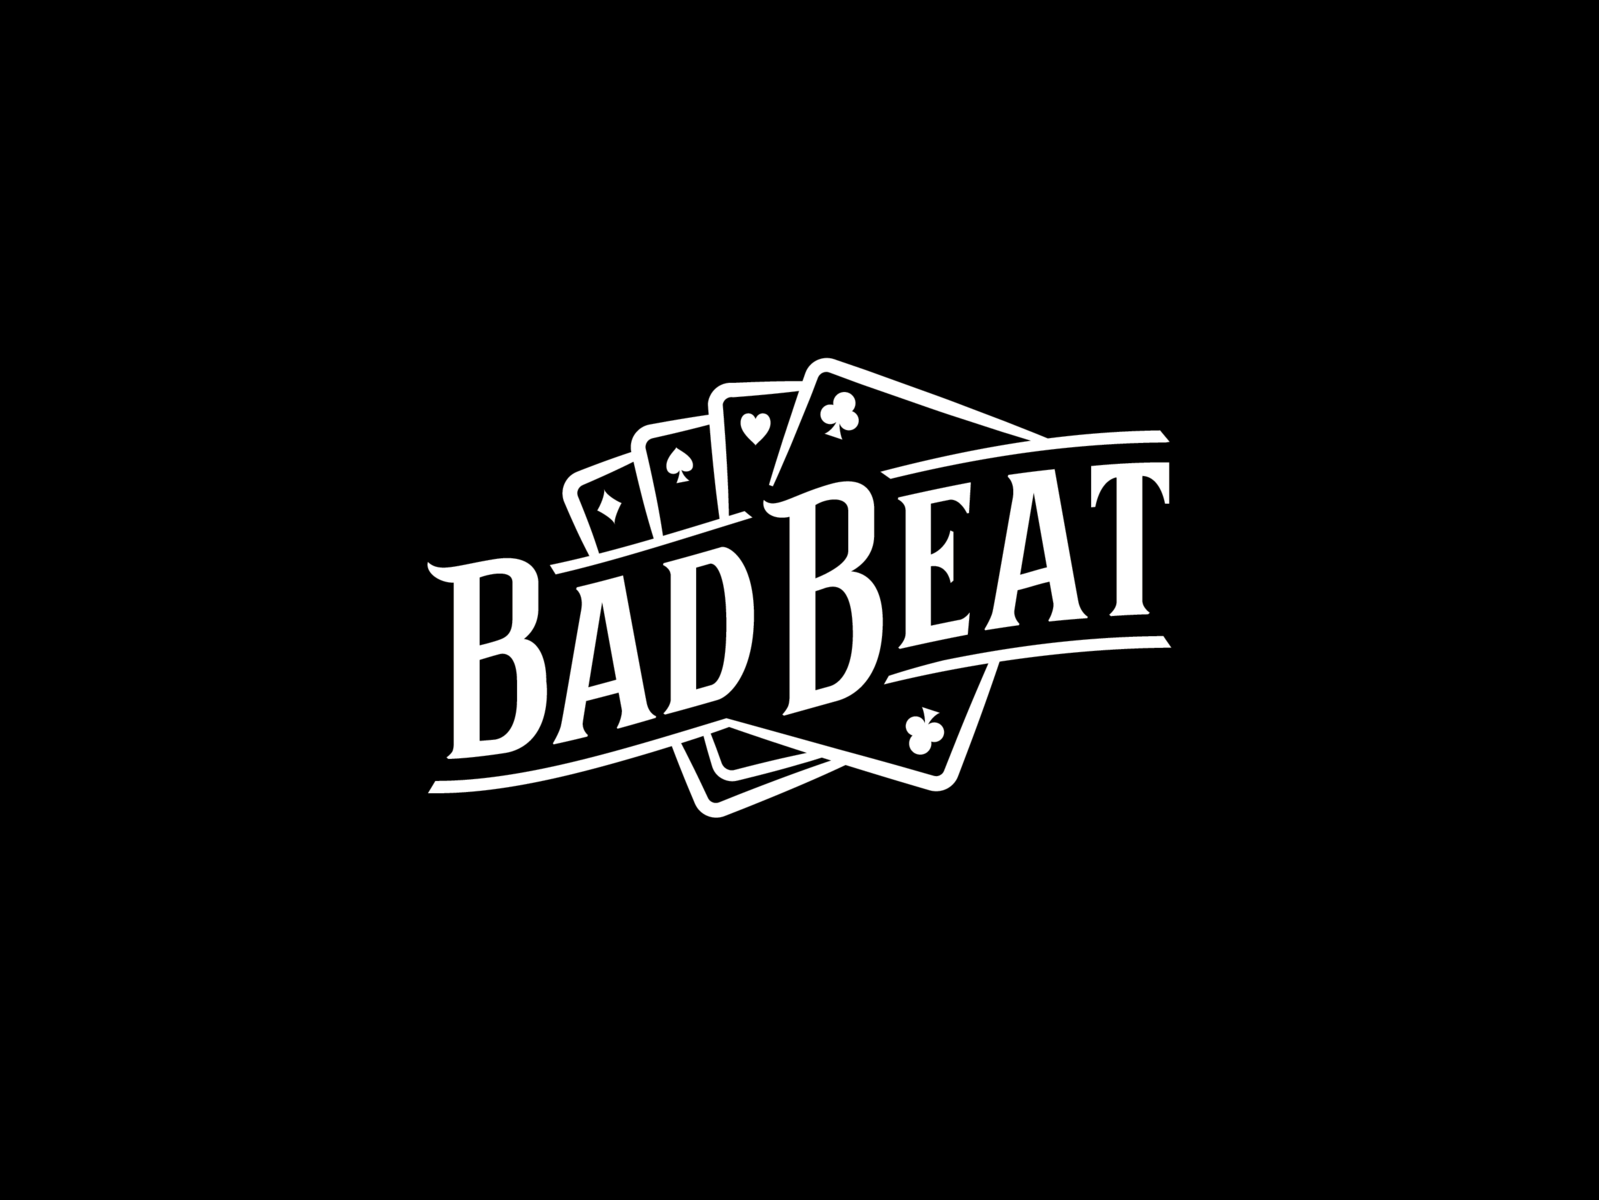 Bad Beat by Mateusz Witczak on Dribbble